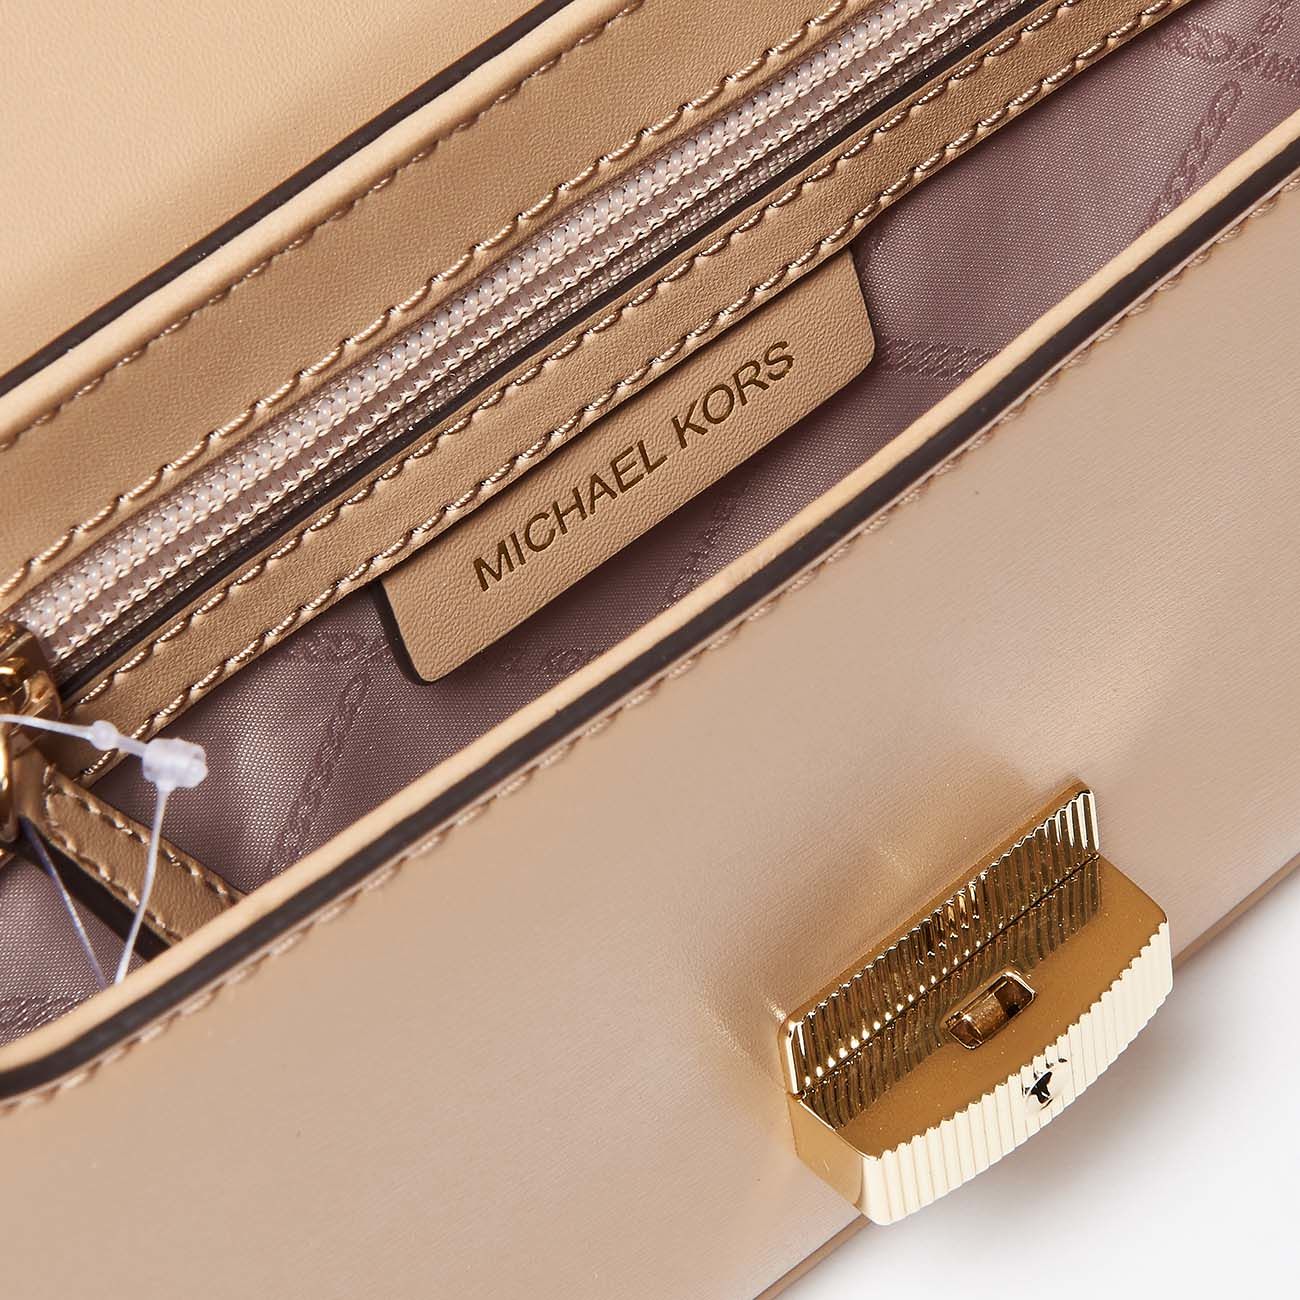 Michael Michael Kors Woman Handbag Brown Size -- Soft Leather